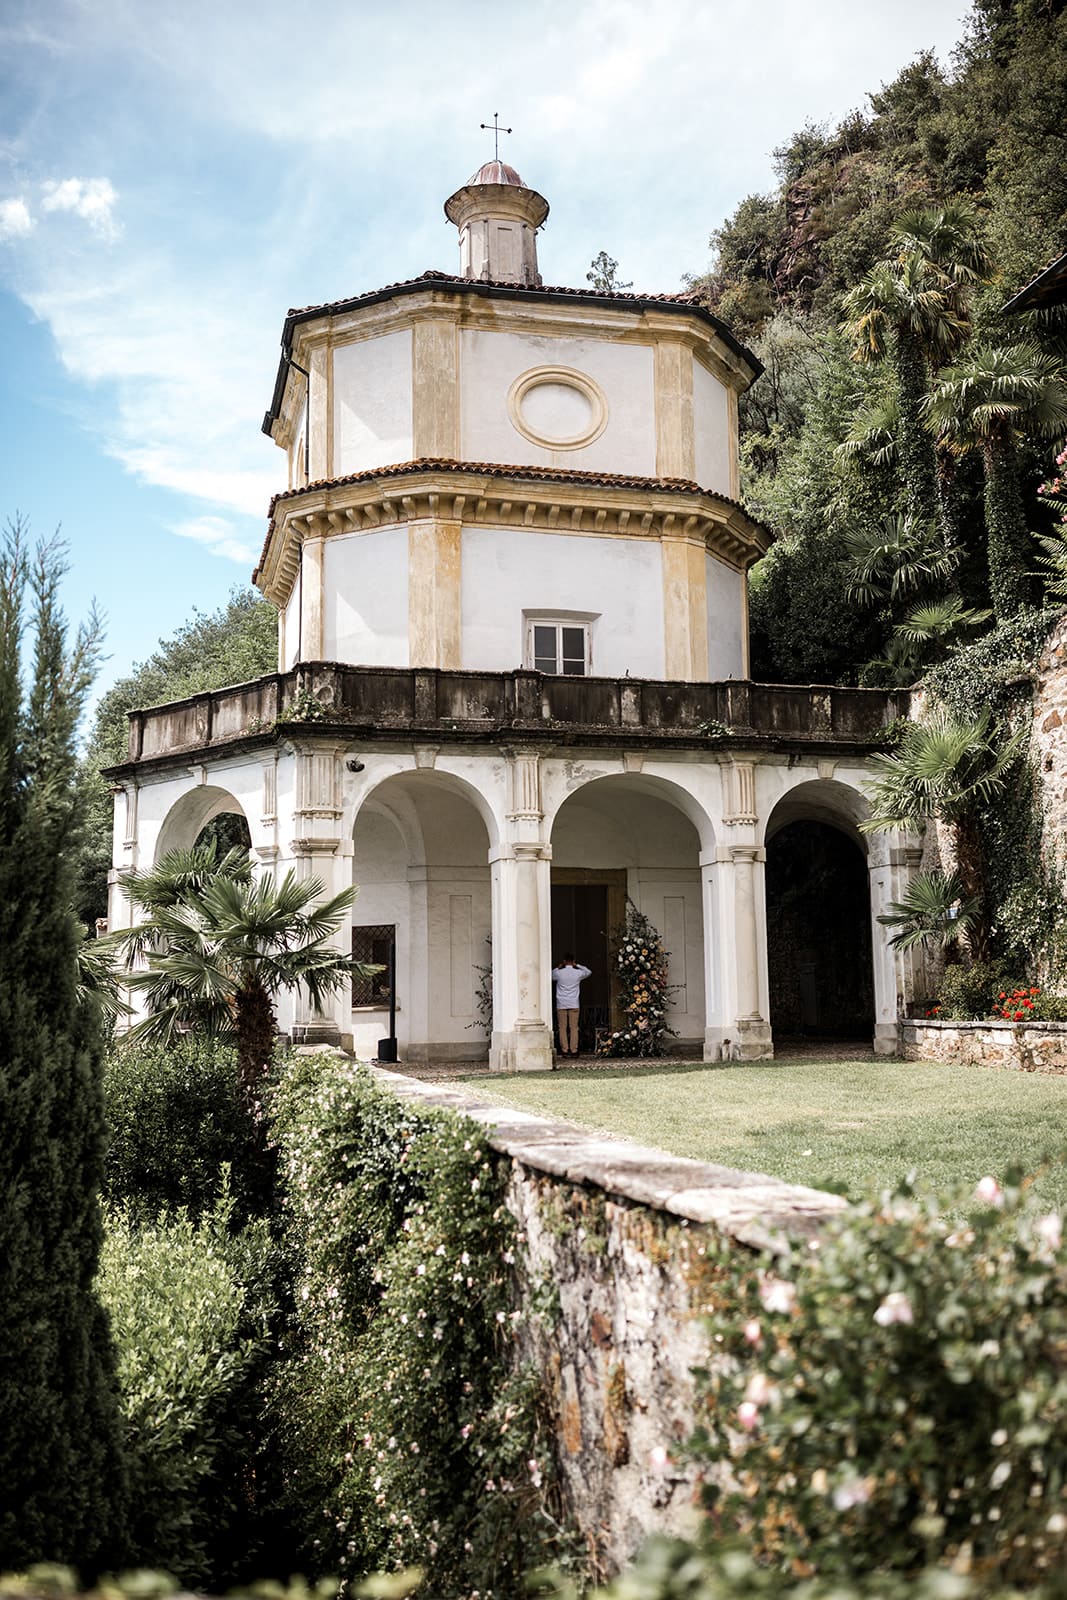 Villa Balbianello, one of the most popular Lake Como wedding venues, hosts a wedding ceremony in the chapel